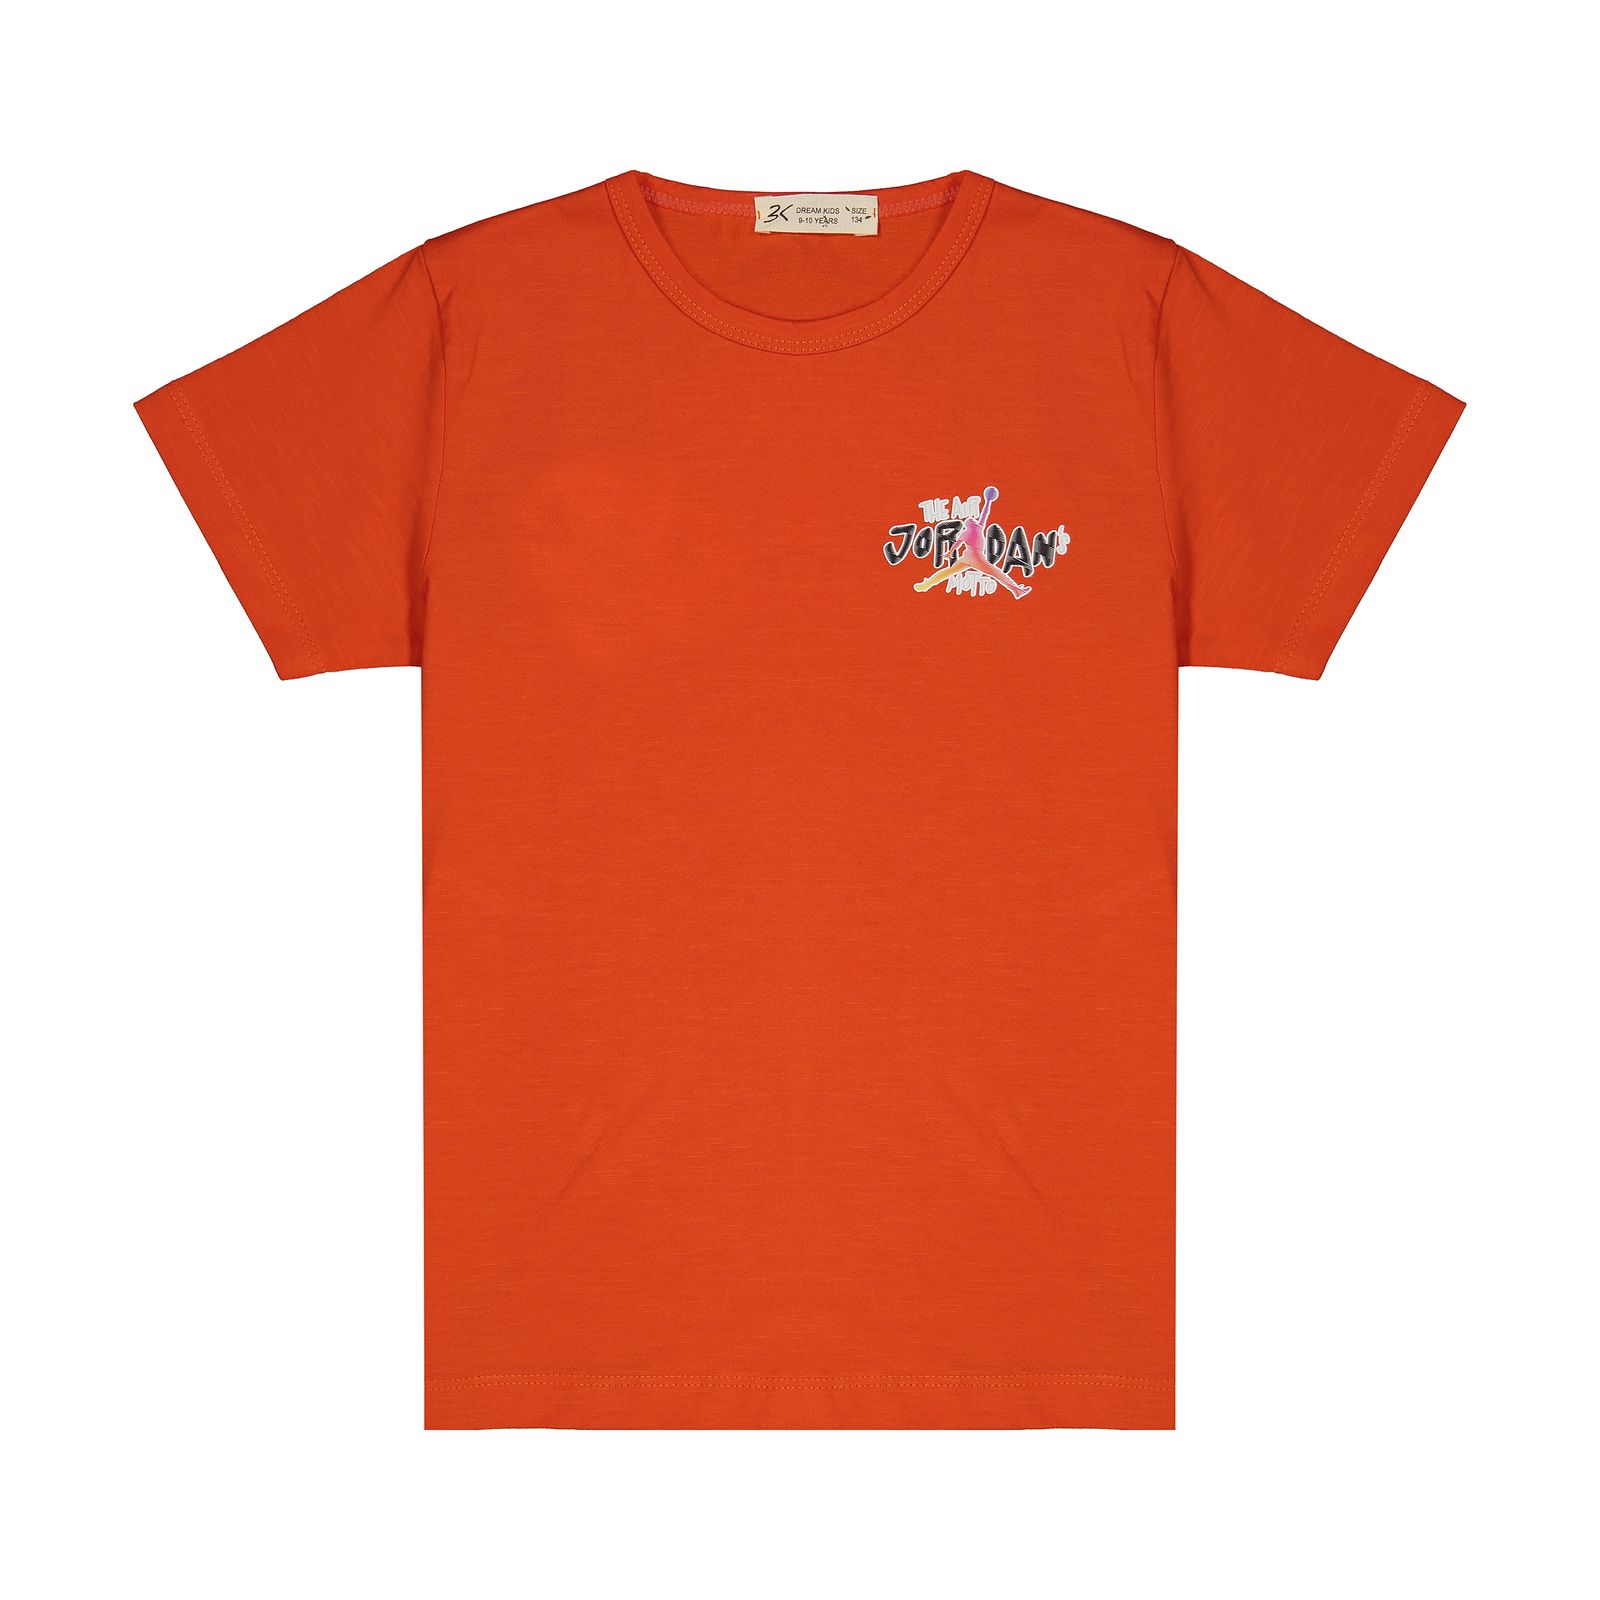 تی شرت پسرانه بی کی مدل 2211120-26 -  - 1